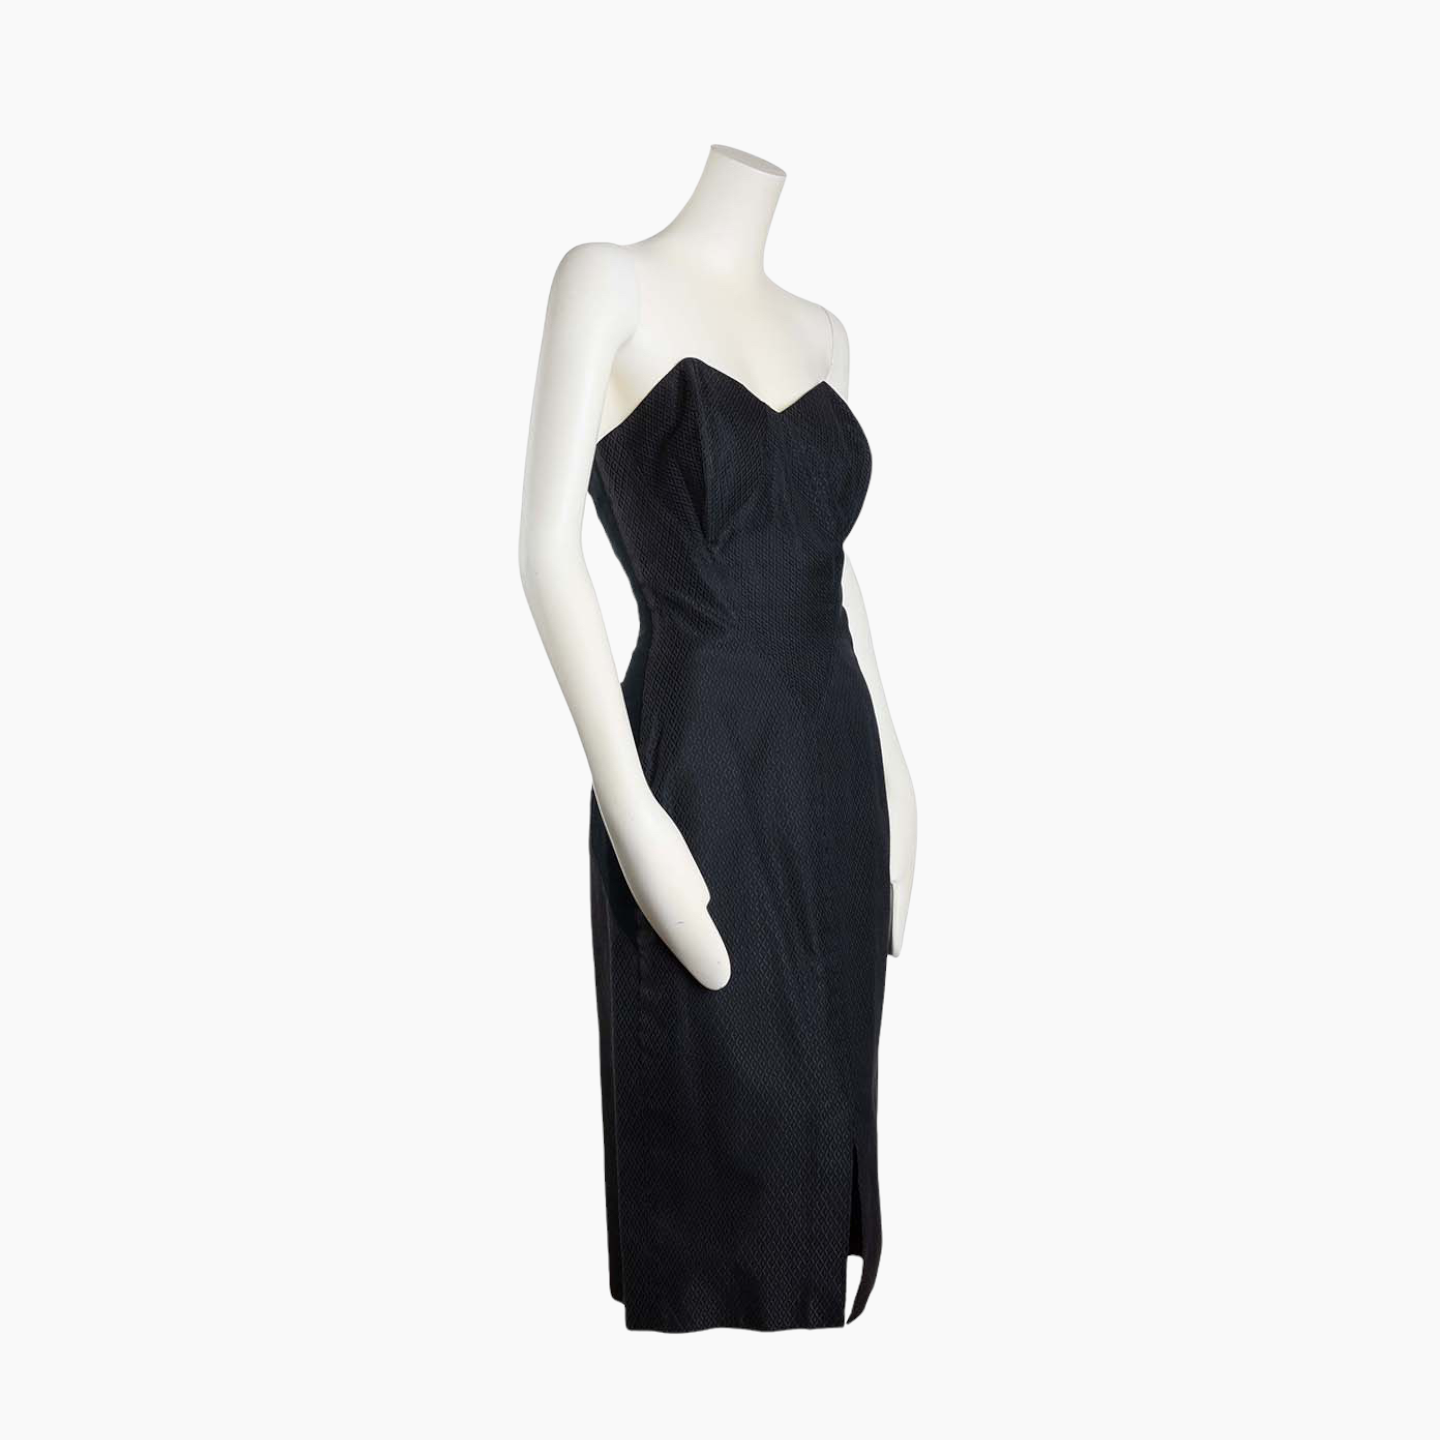 Lysis vintage Bustier dress in black brocaded cotton Marianne Beck - M - 1984